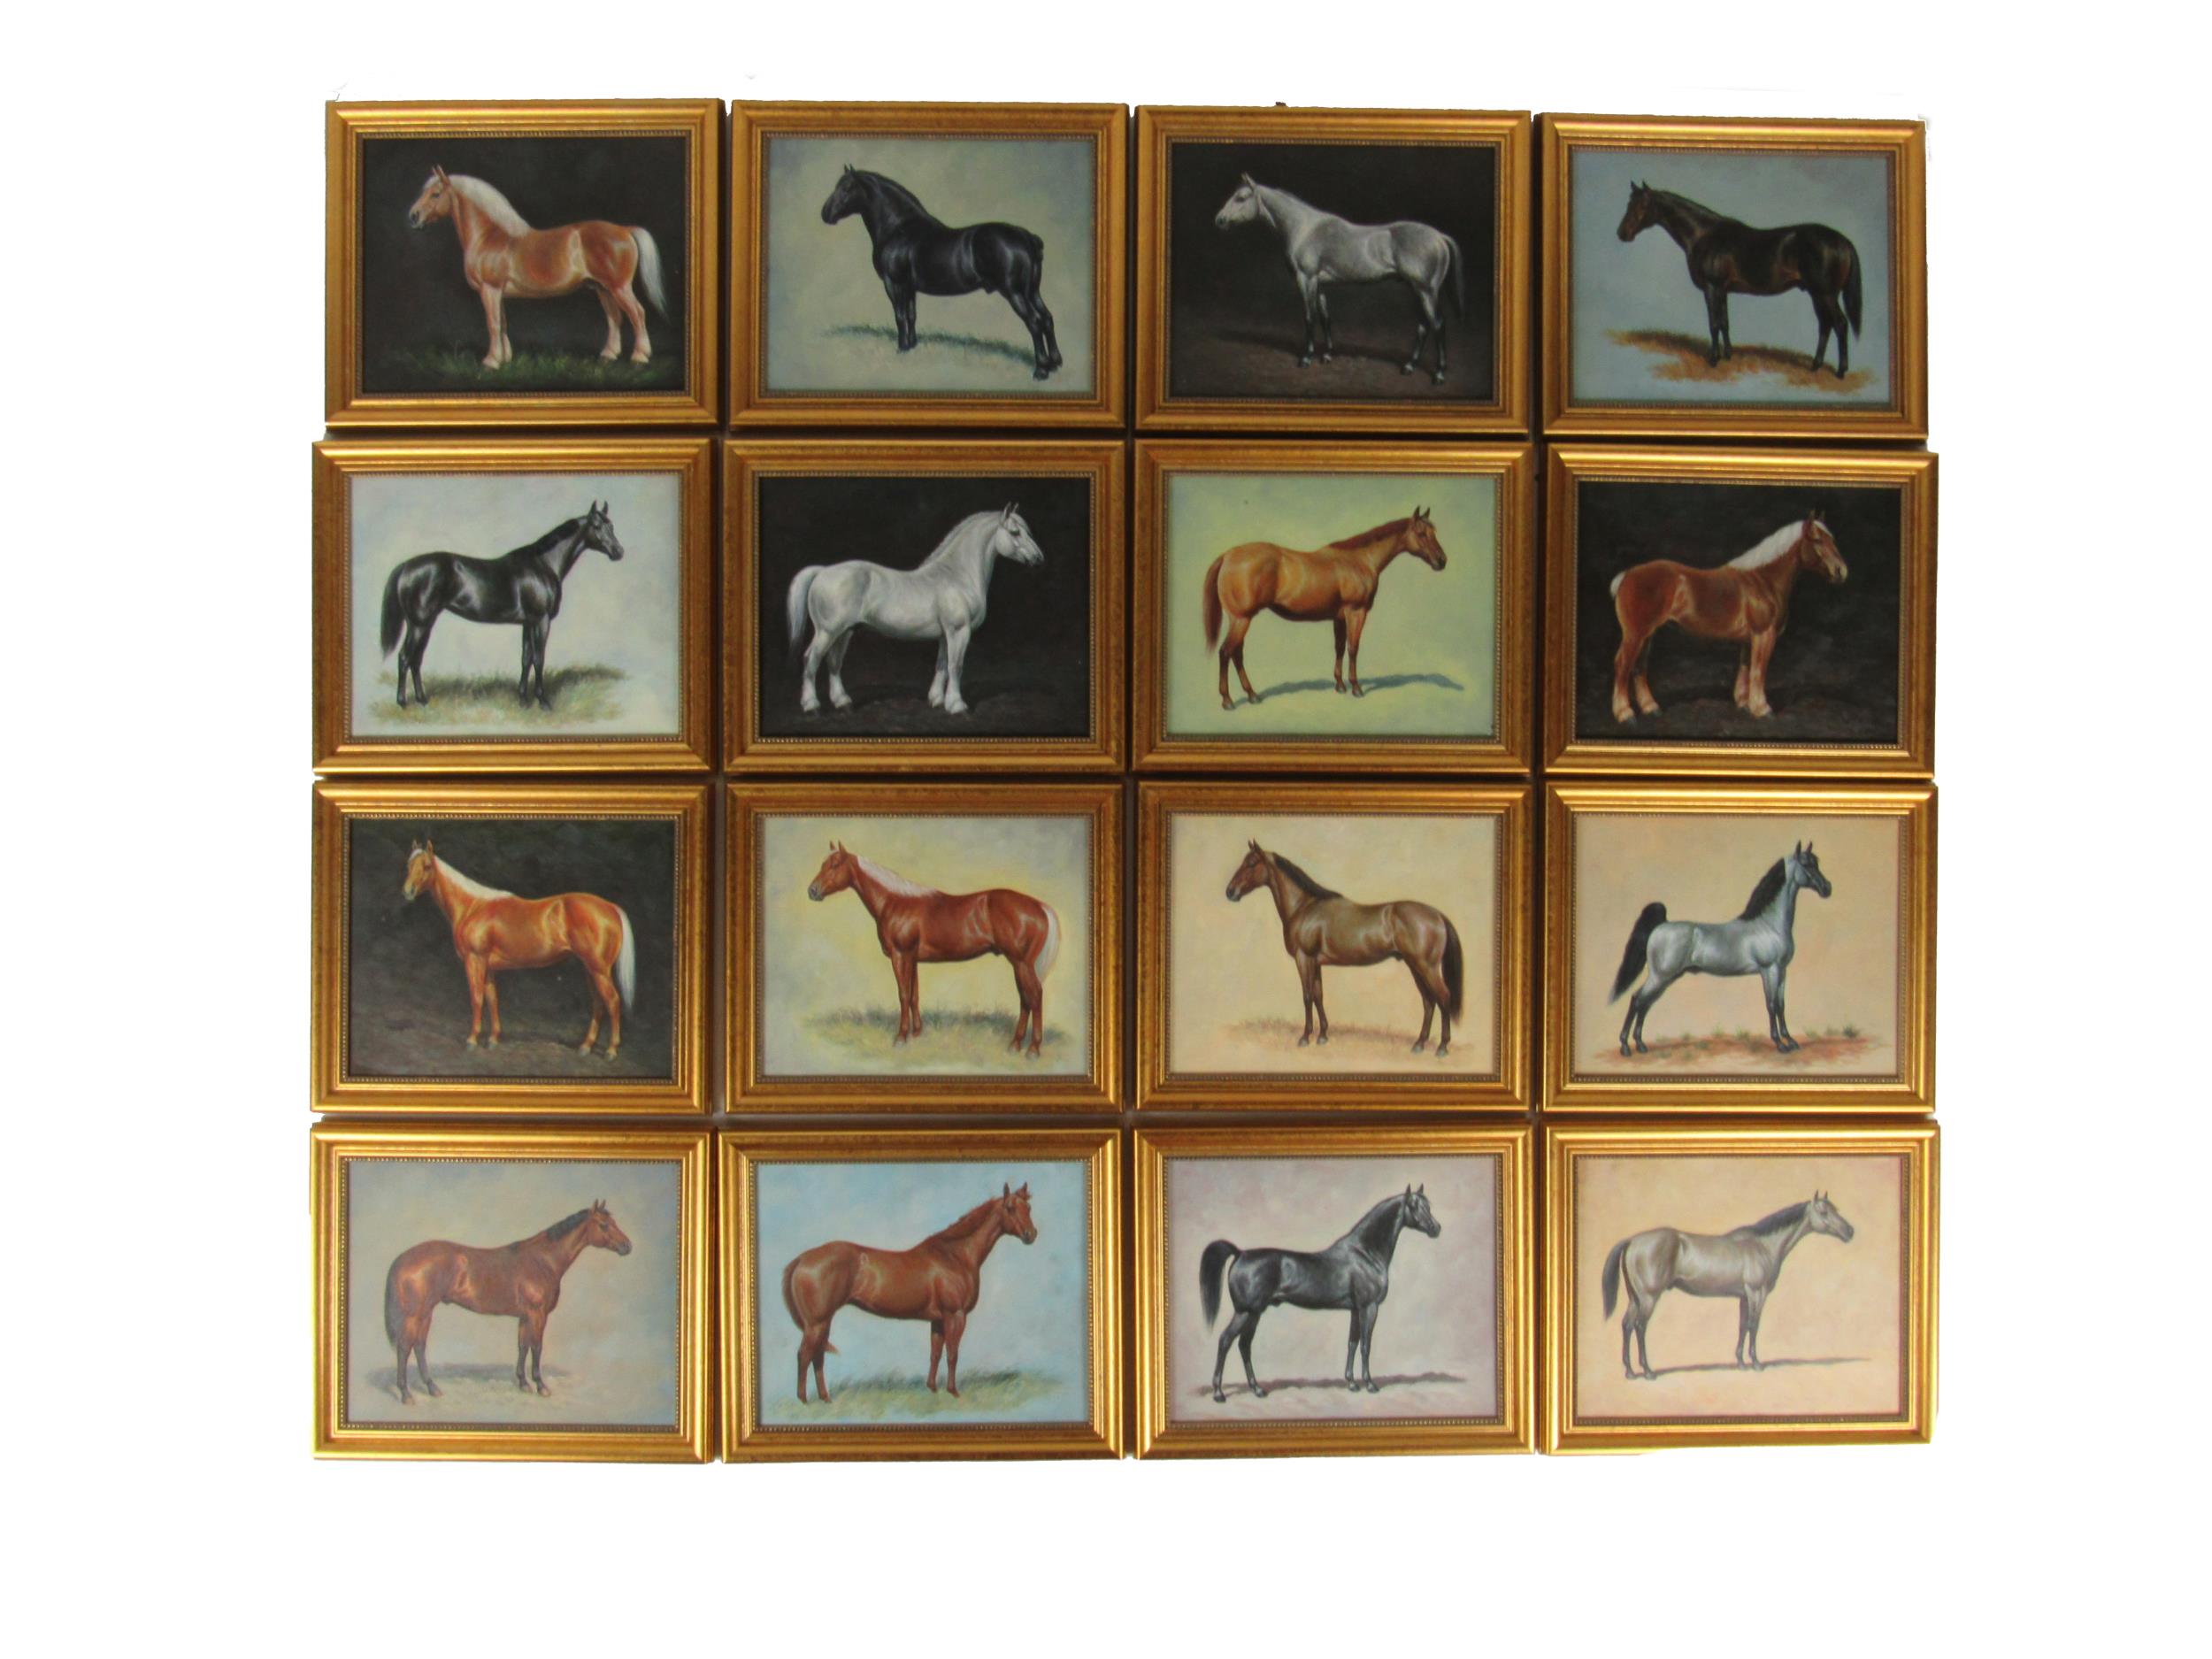 20th Century Irish School Equestrian: A set of sixteen original Oils on Board, depicting various